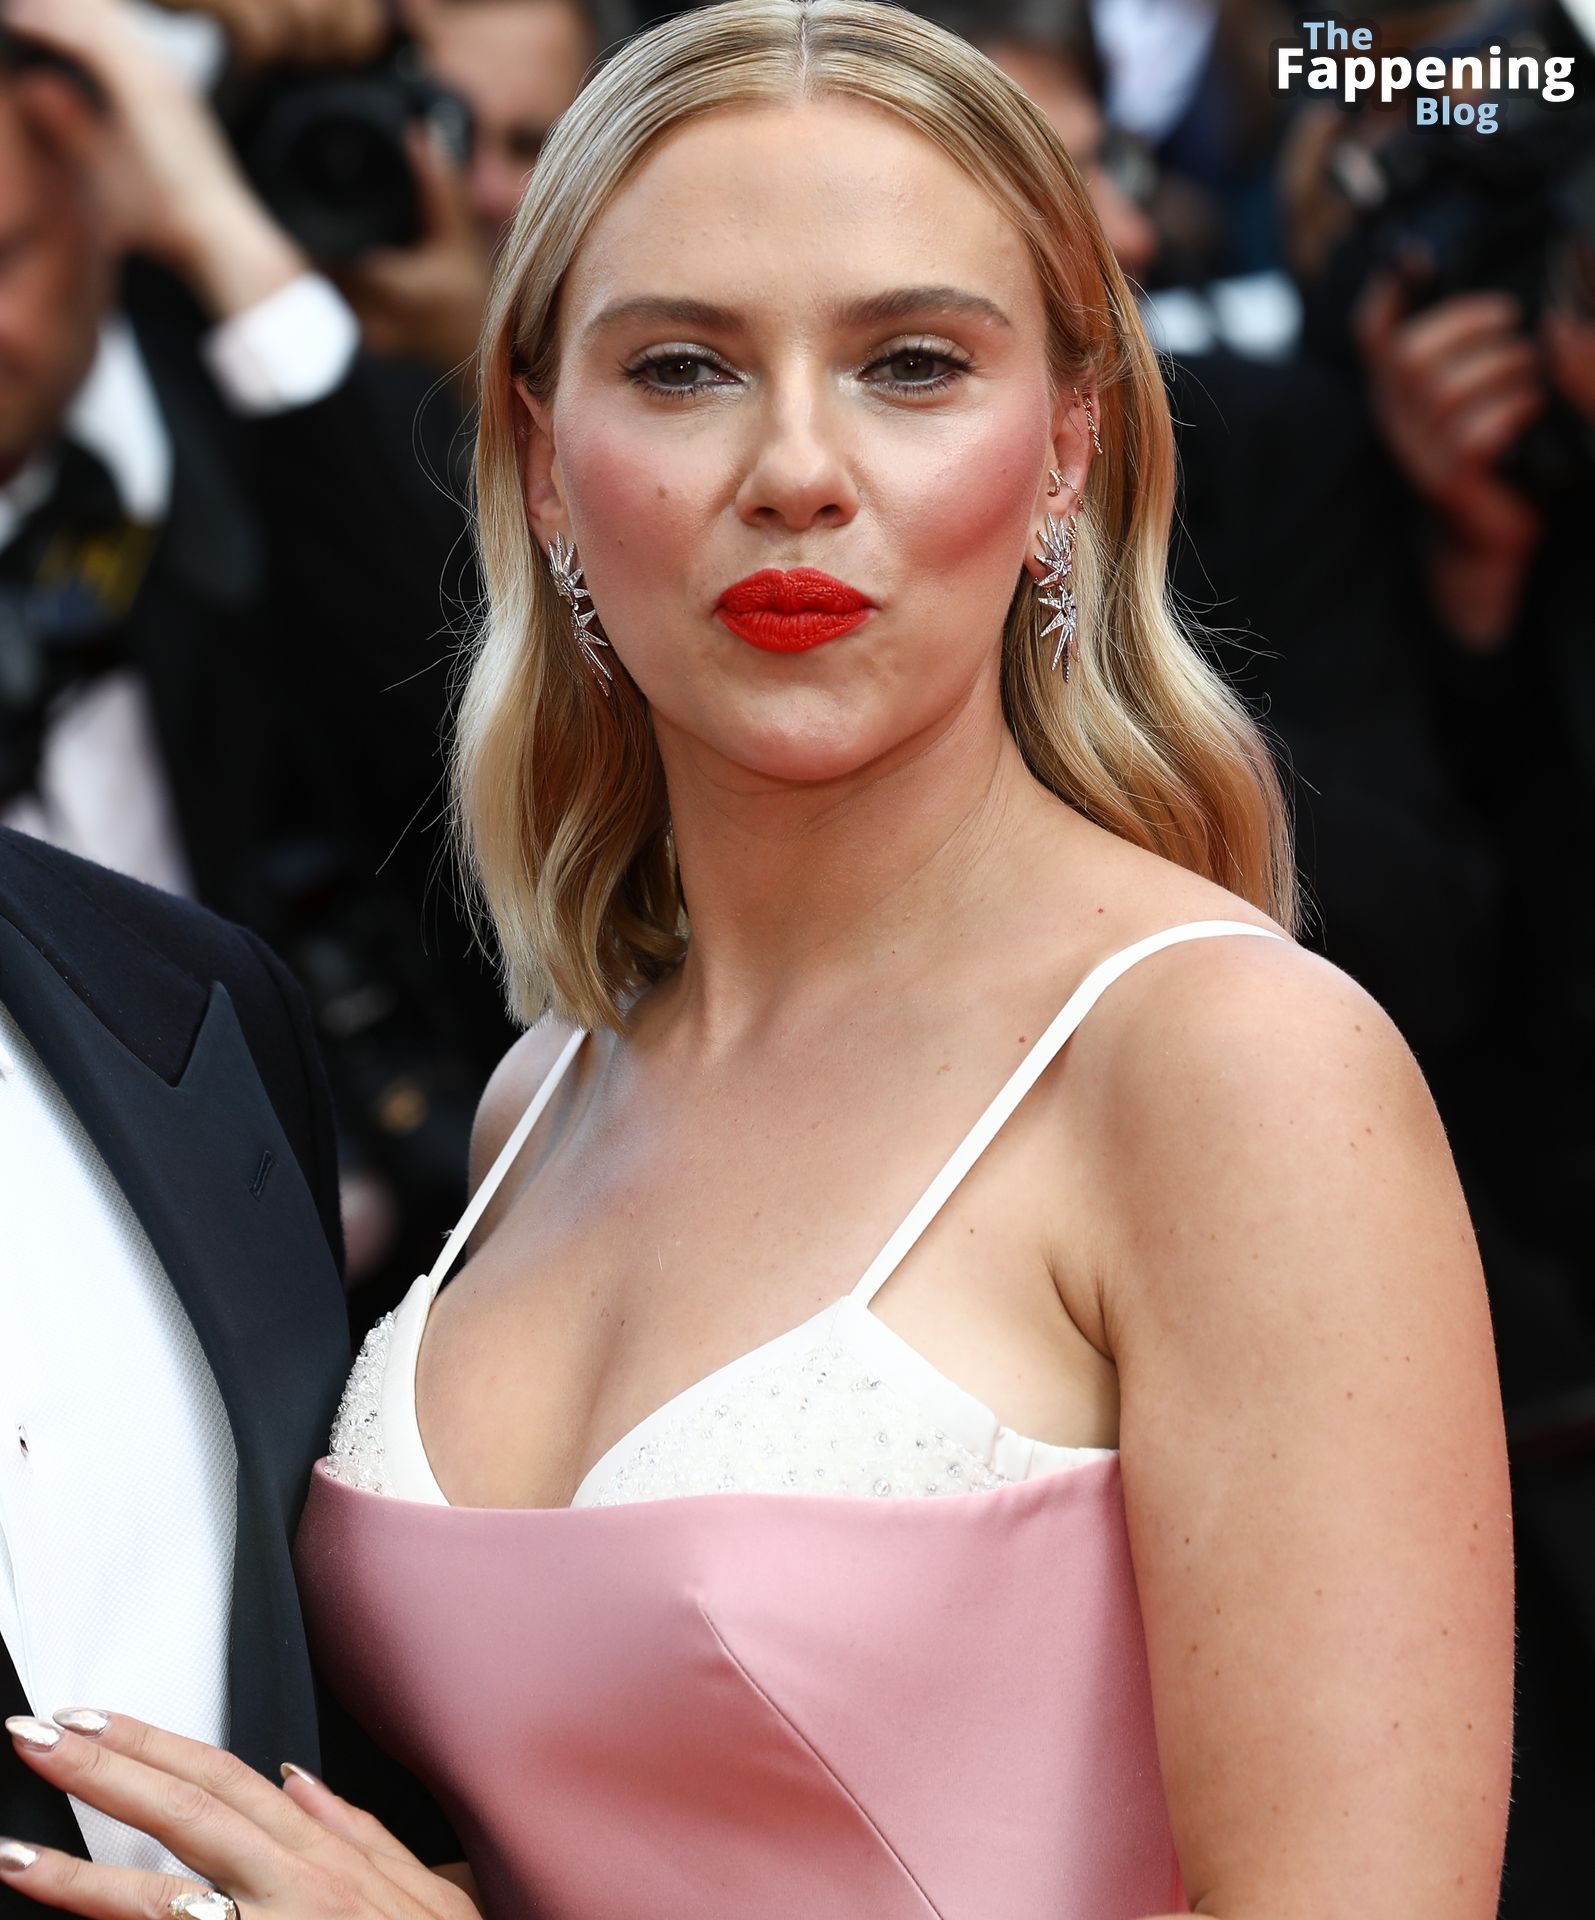 Scarlett-Johansson-Sexy-The-Fappening-Blog-24.jpg